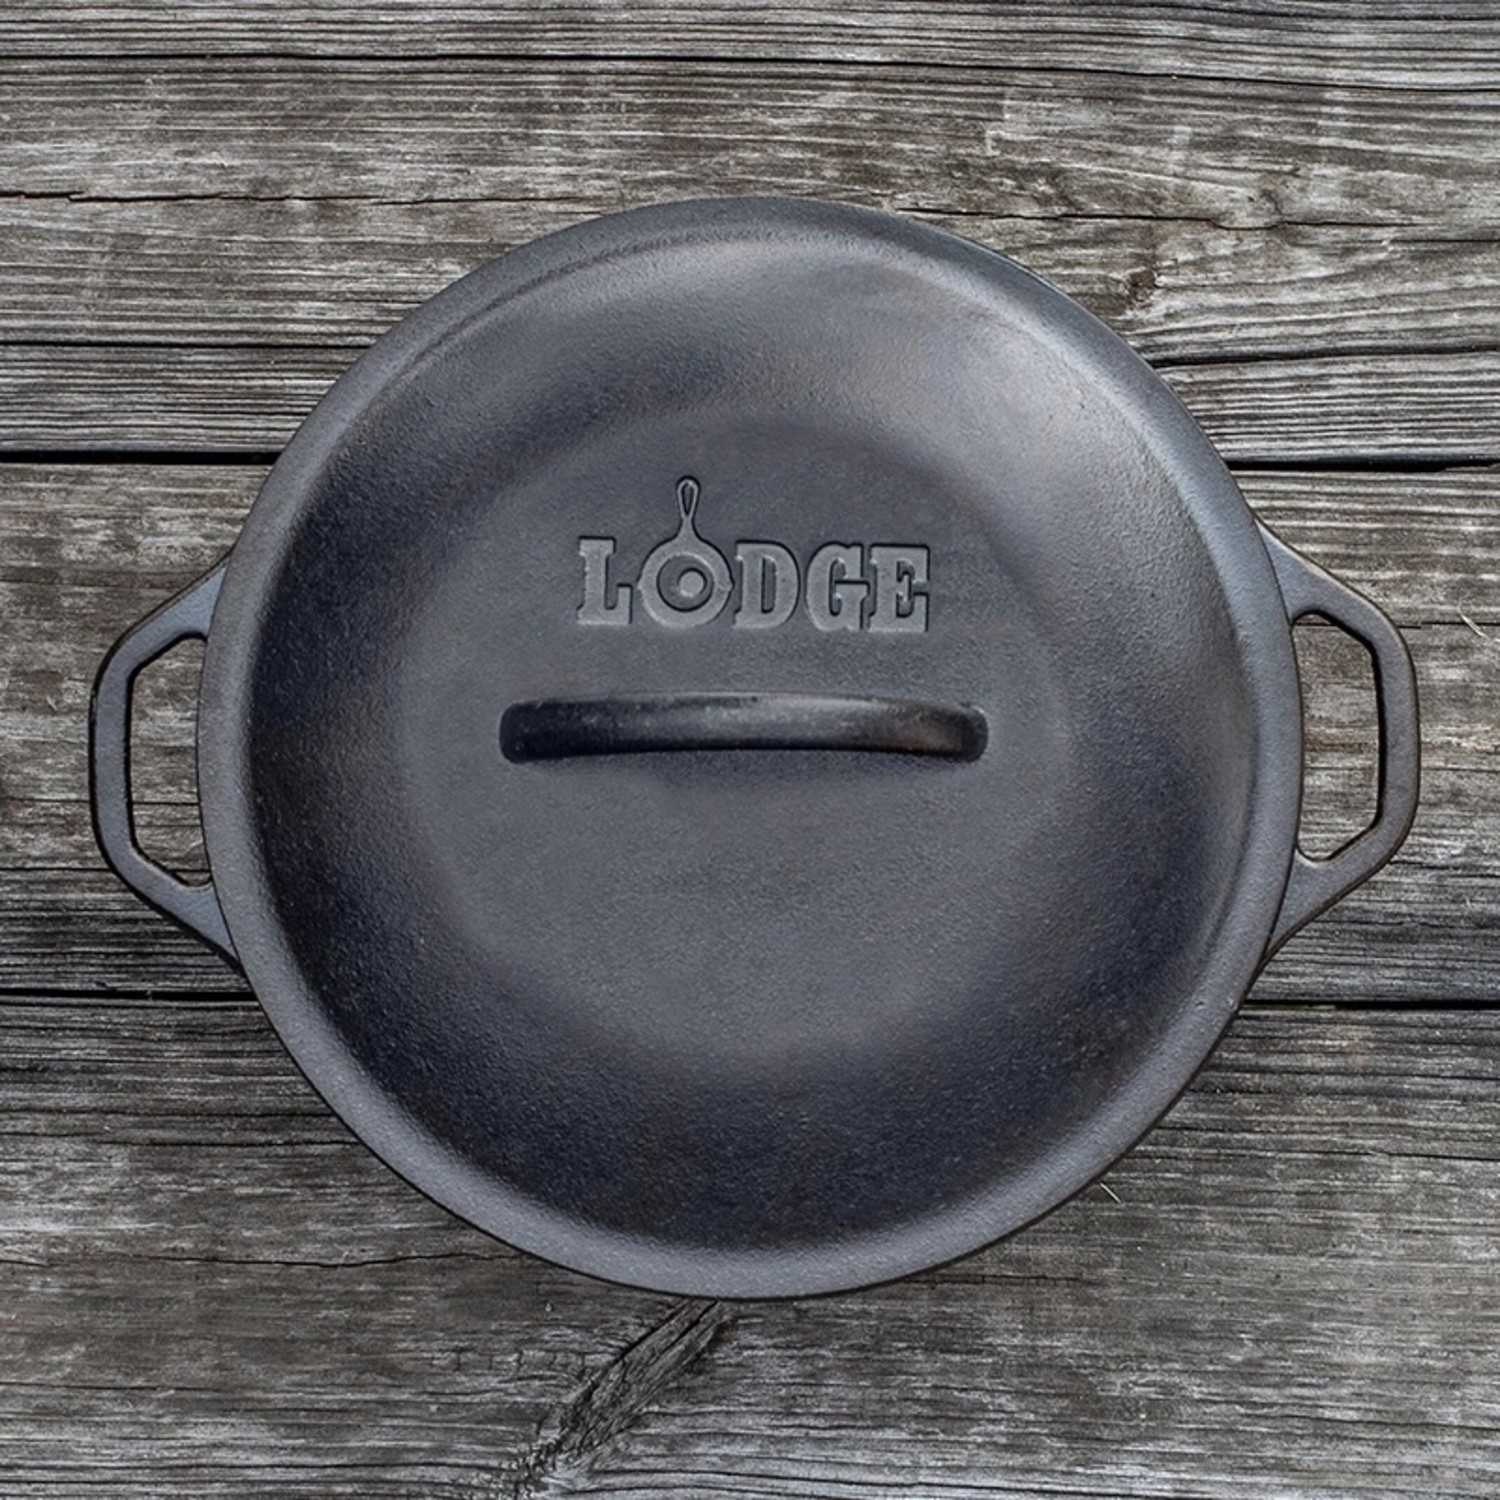 Lodge Seasoned Cast Iron Dutch Oven